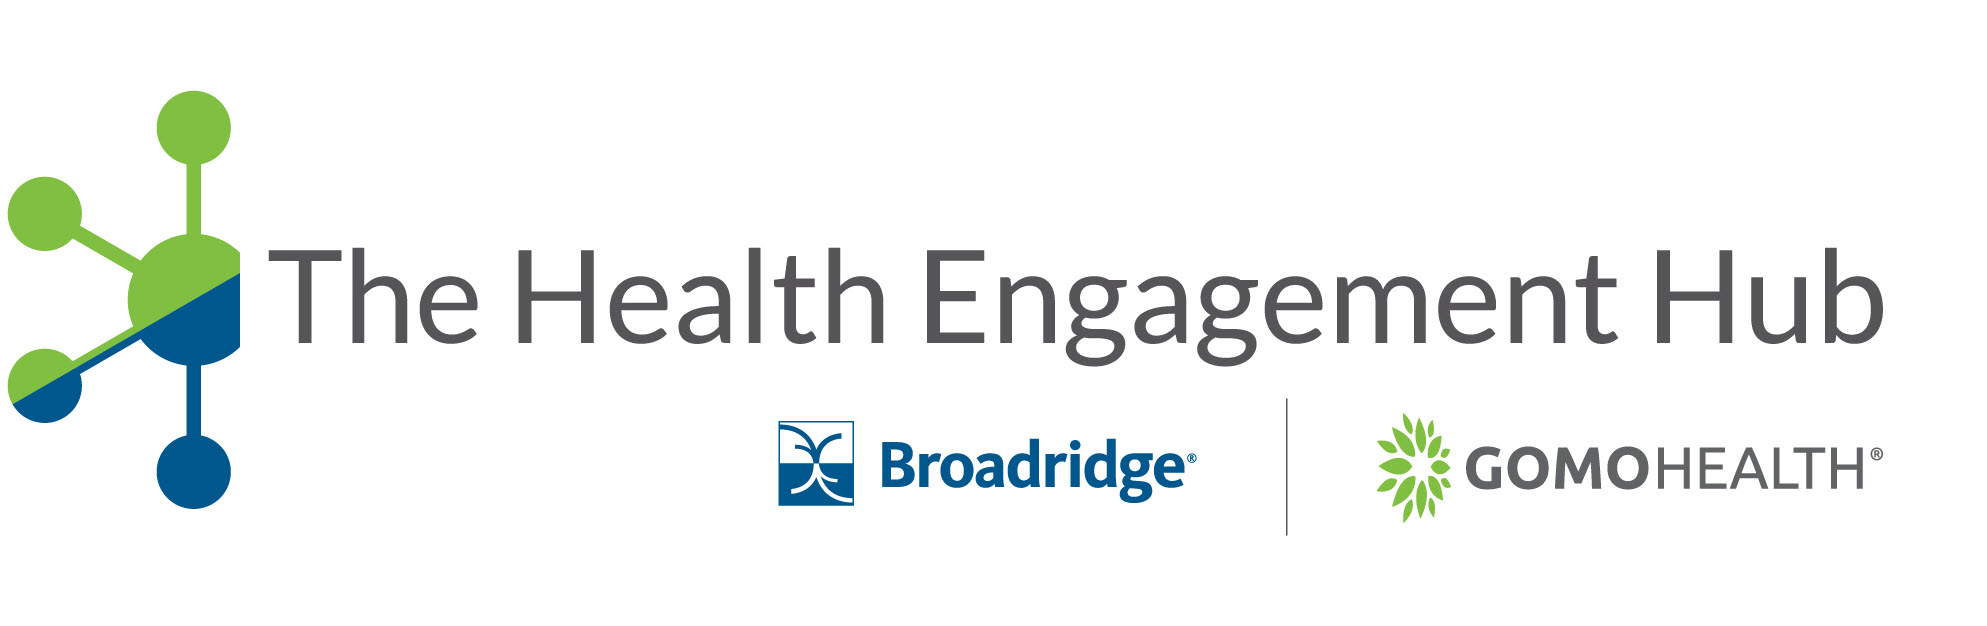 The Health Engagement Hub